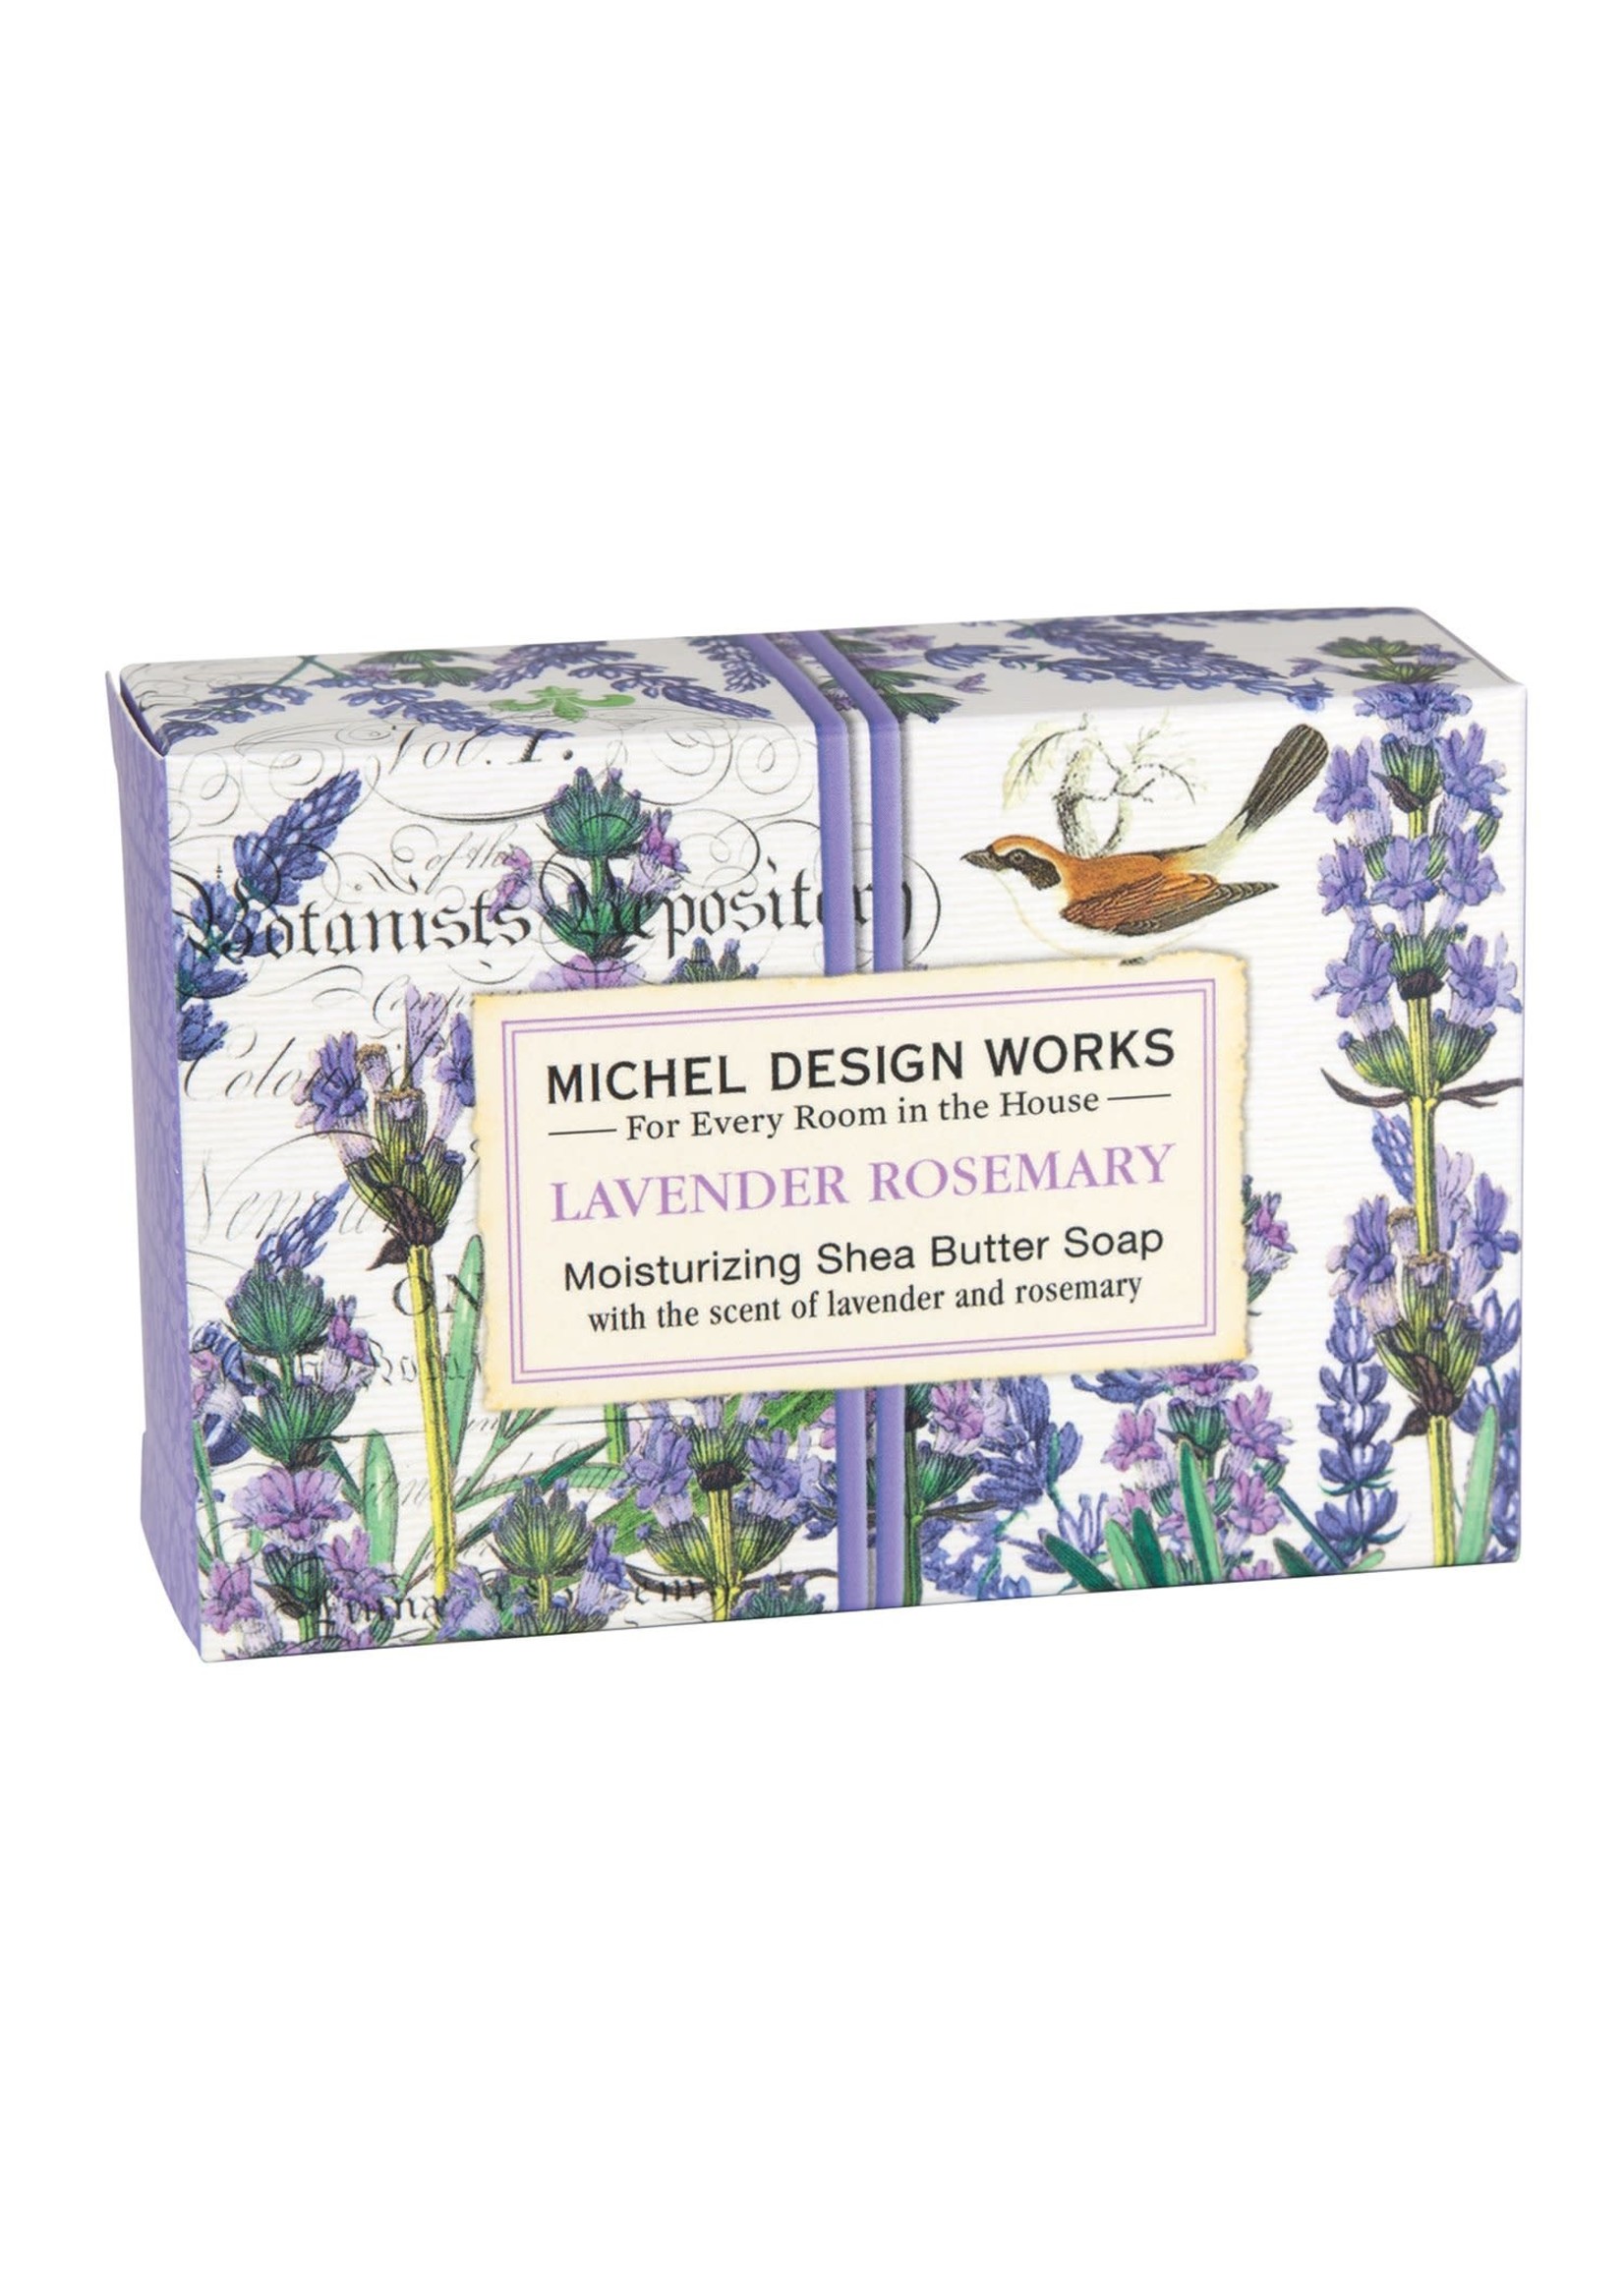 Michel Design Works Lavender Rosemary Bar Soap 4.5 oz